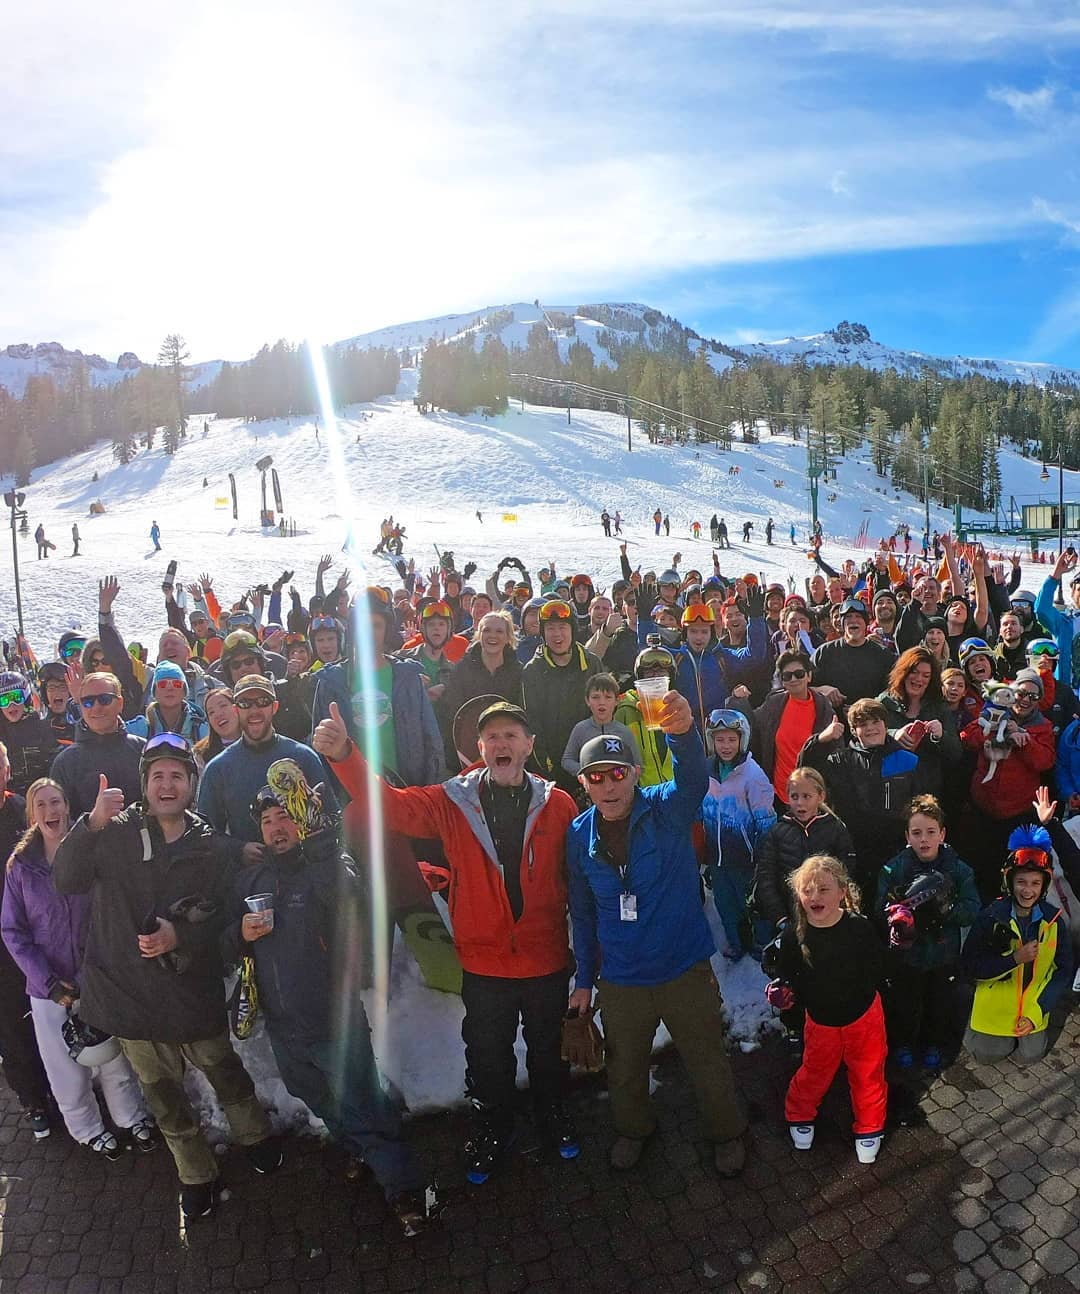 Sugar Bowl ski resort opens Nov. 29